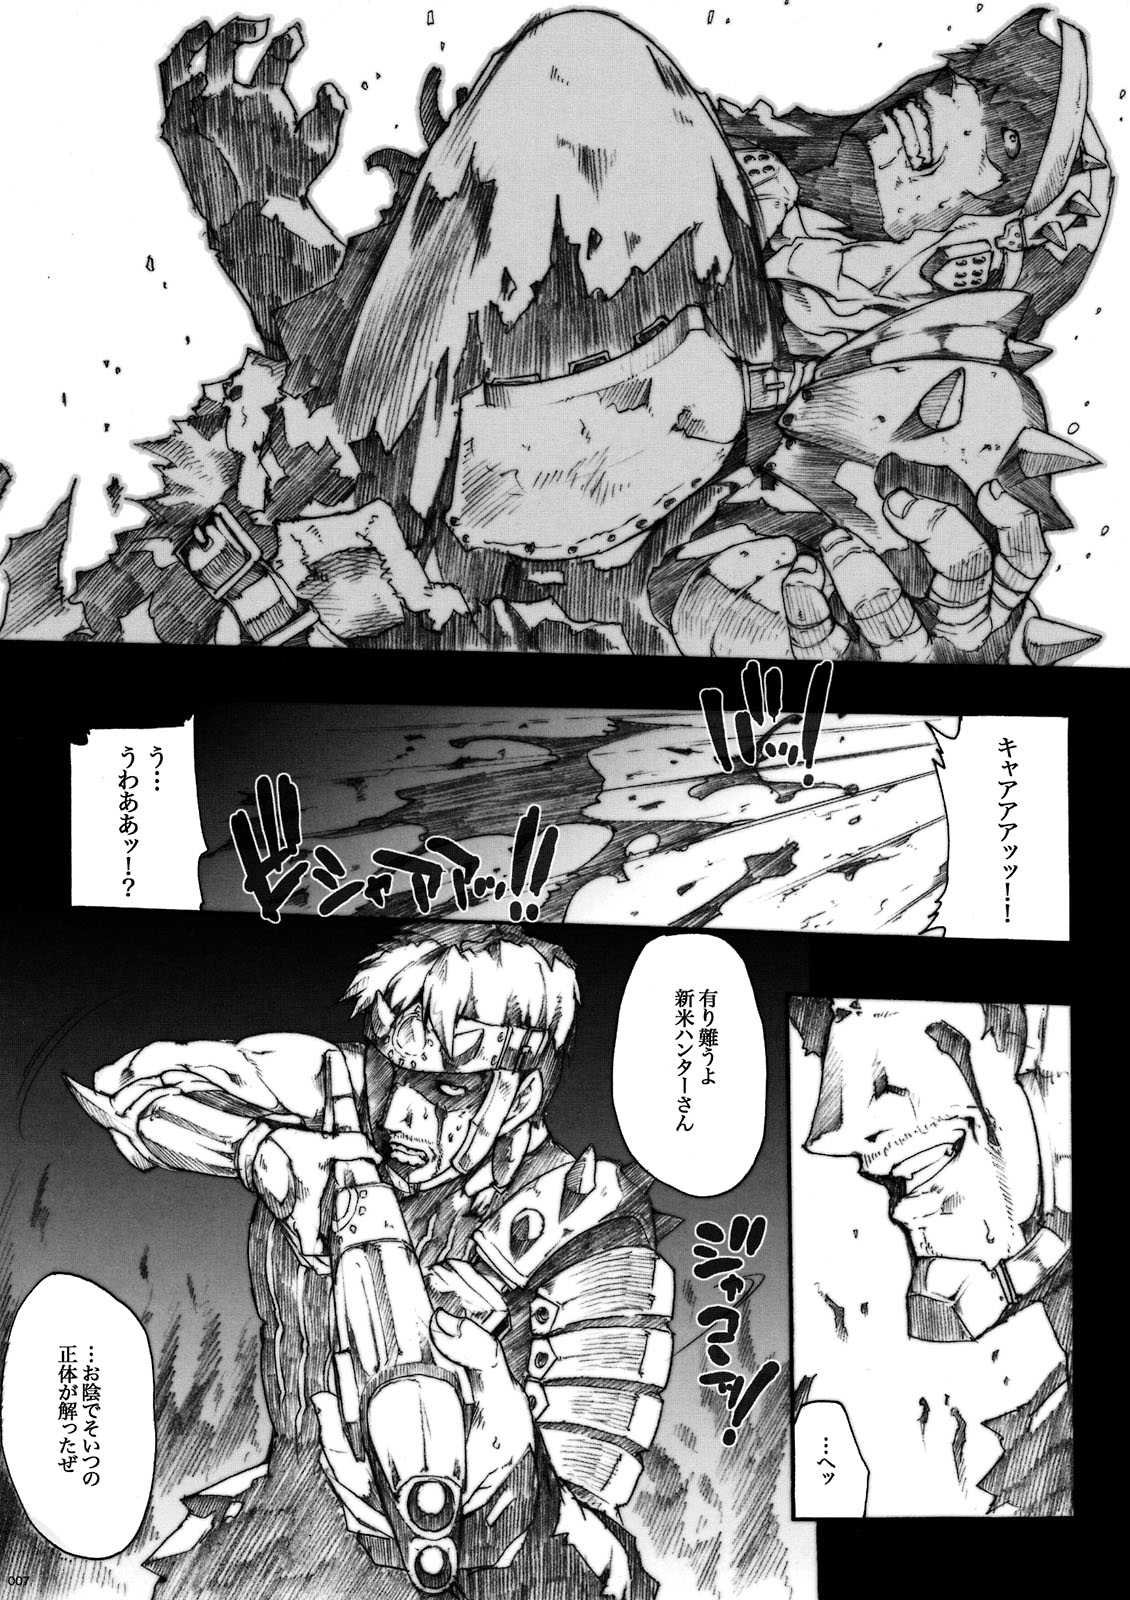 (COMIC1☆3) [ERECT TOUCH (Erect Sawaru)] Invisible Hunter (Monster Hunter) (COMIC1☆3) [ERECT TOUCH (エレクトさわる)　] INVISIBLE HUNTER (モンスターハンター)